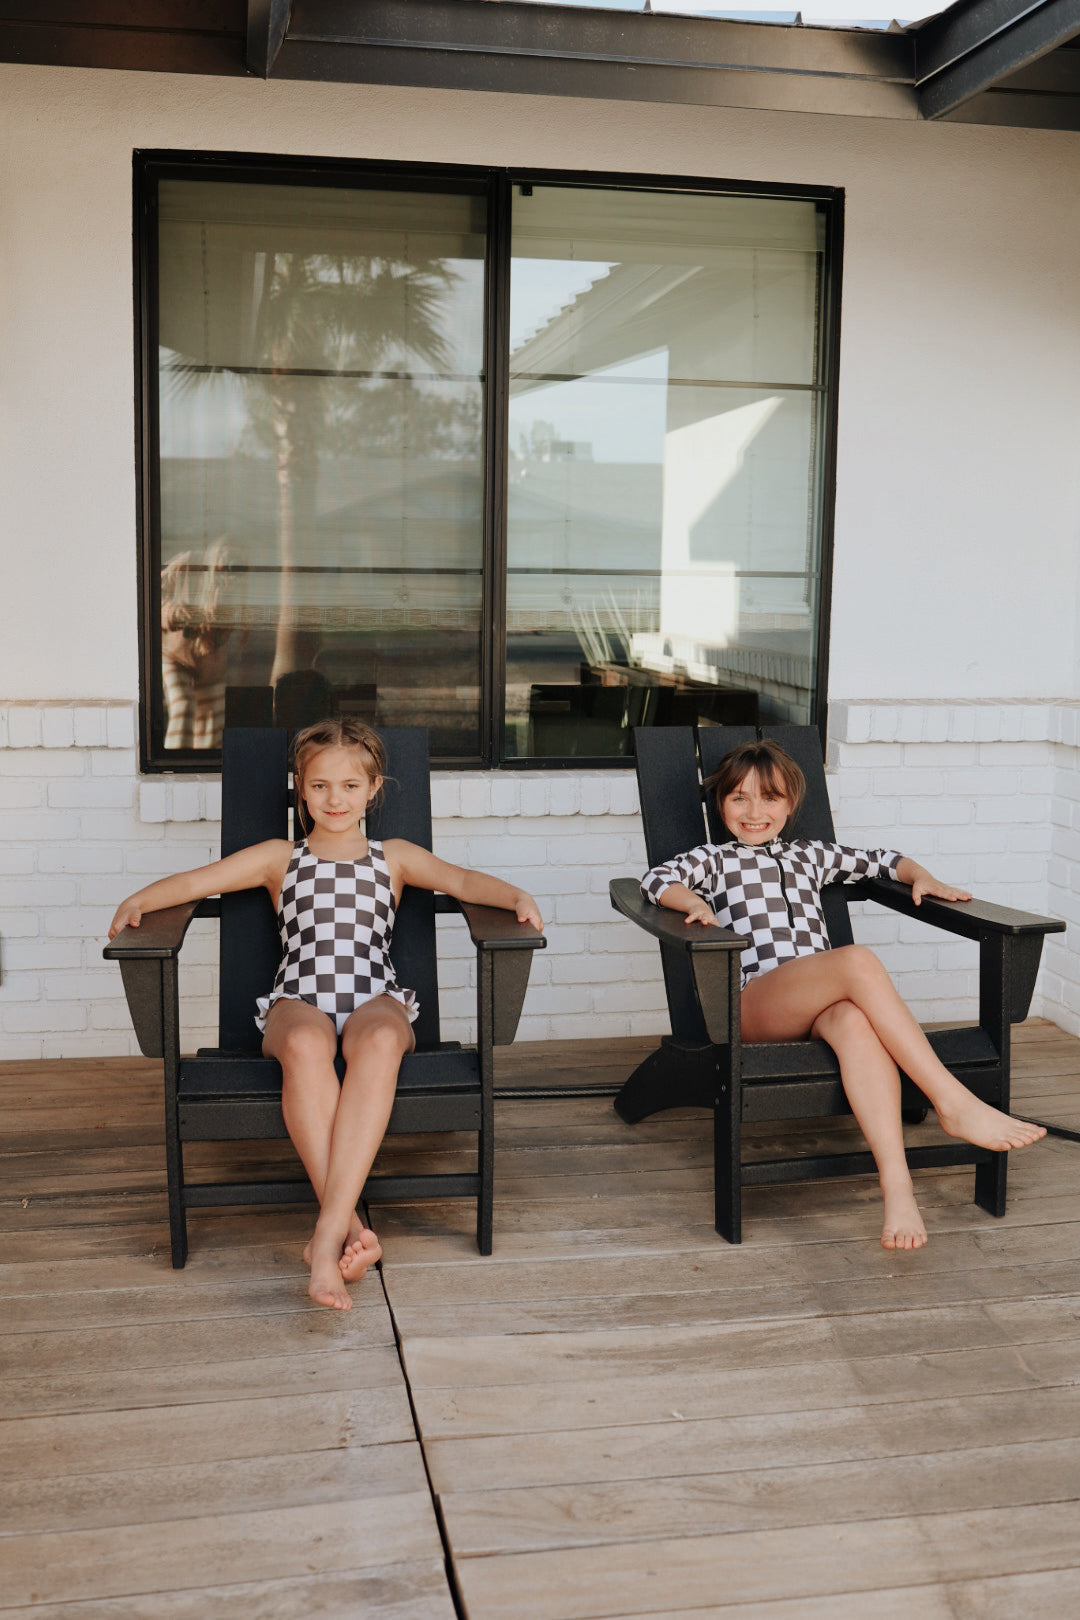 Forever French Sleeveless Swimsuit - Black Checkerboard